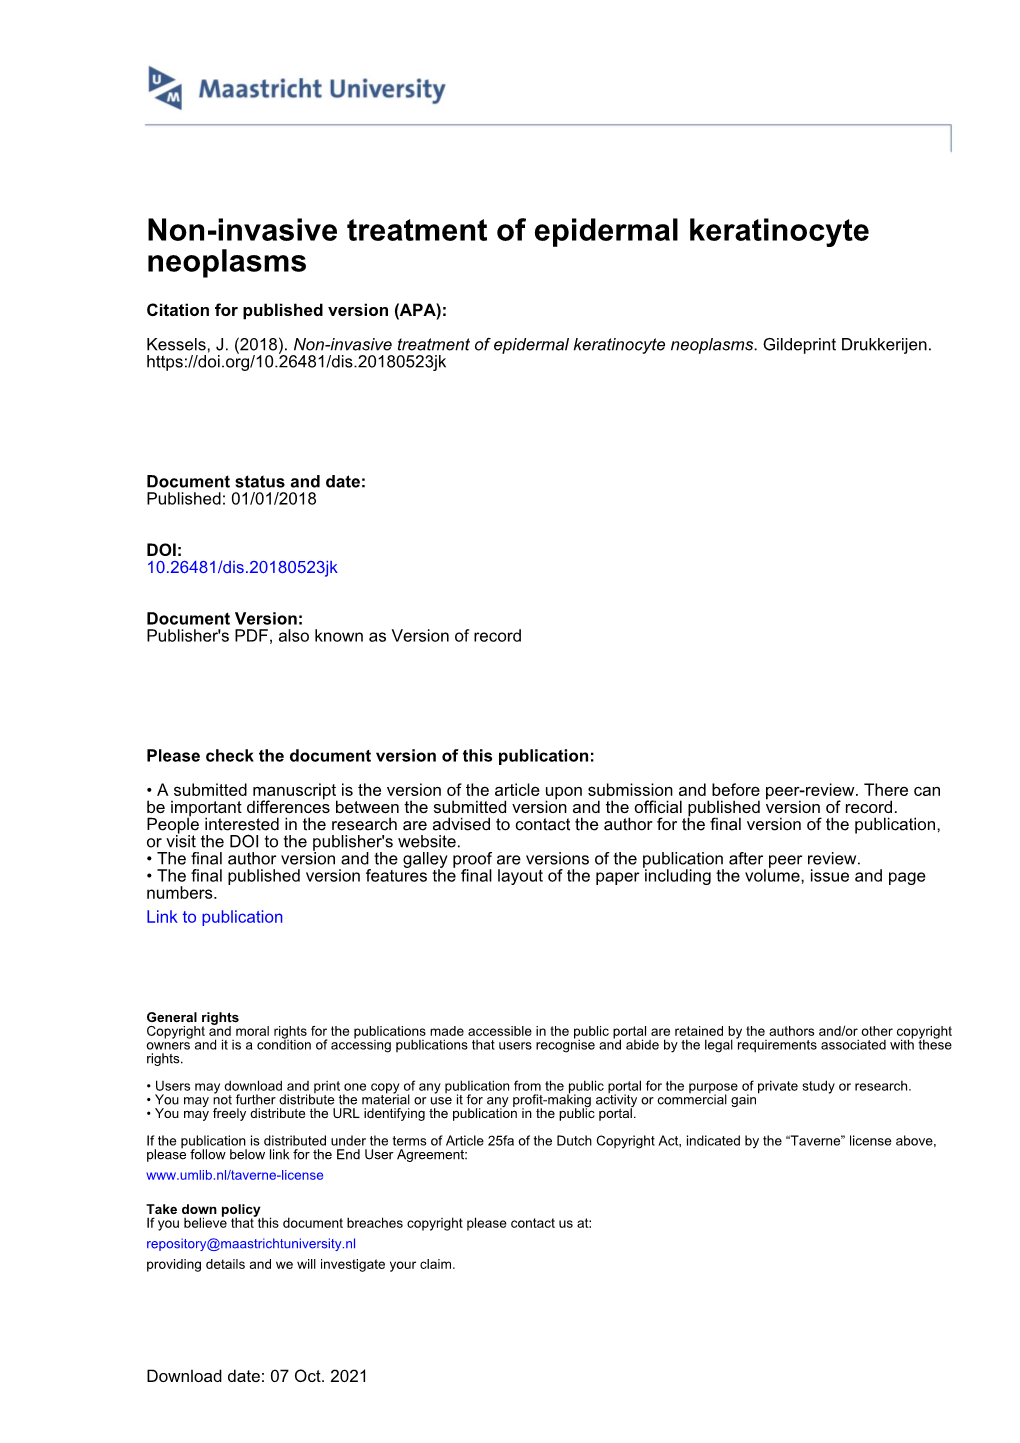 Non-Invasive Treatment of Epidermal Keratinocyte Neoplasms